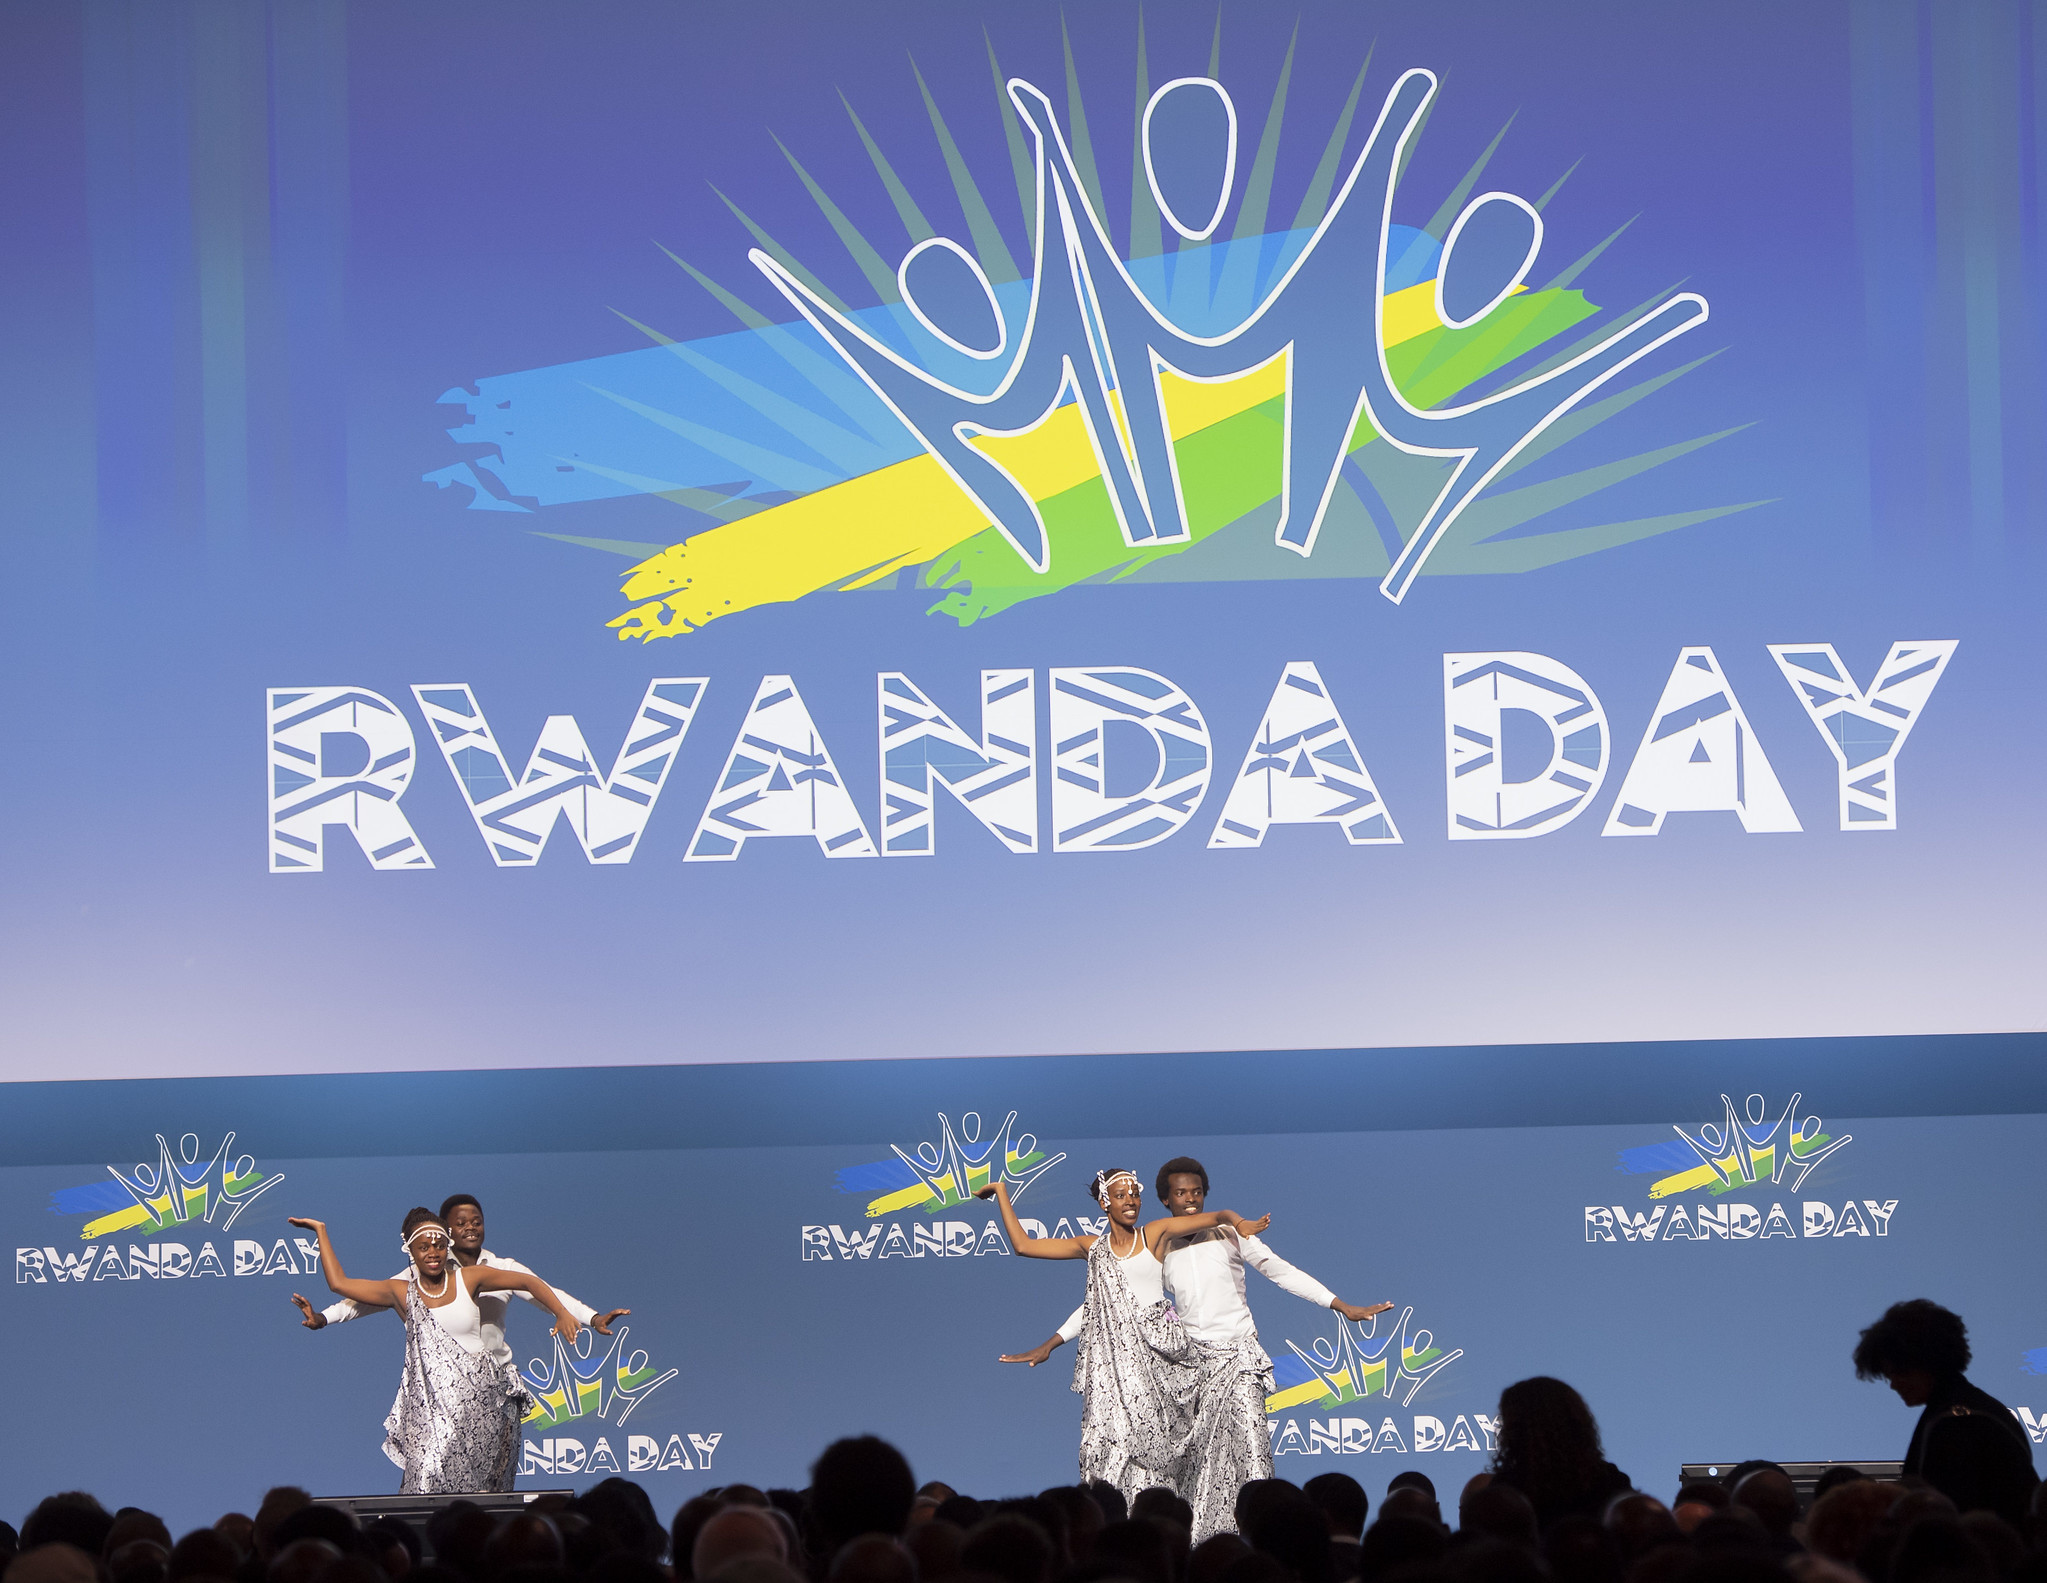 Rwanda Day: Umuco n'ururimi nibihabwe agaciro